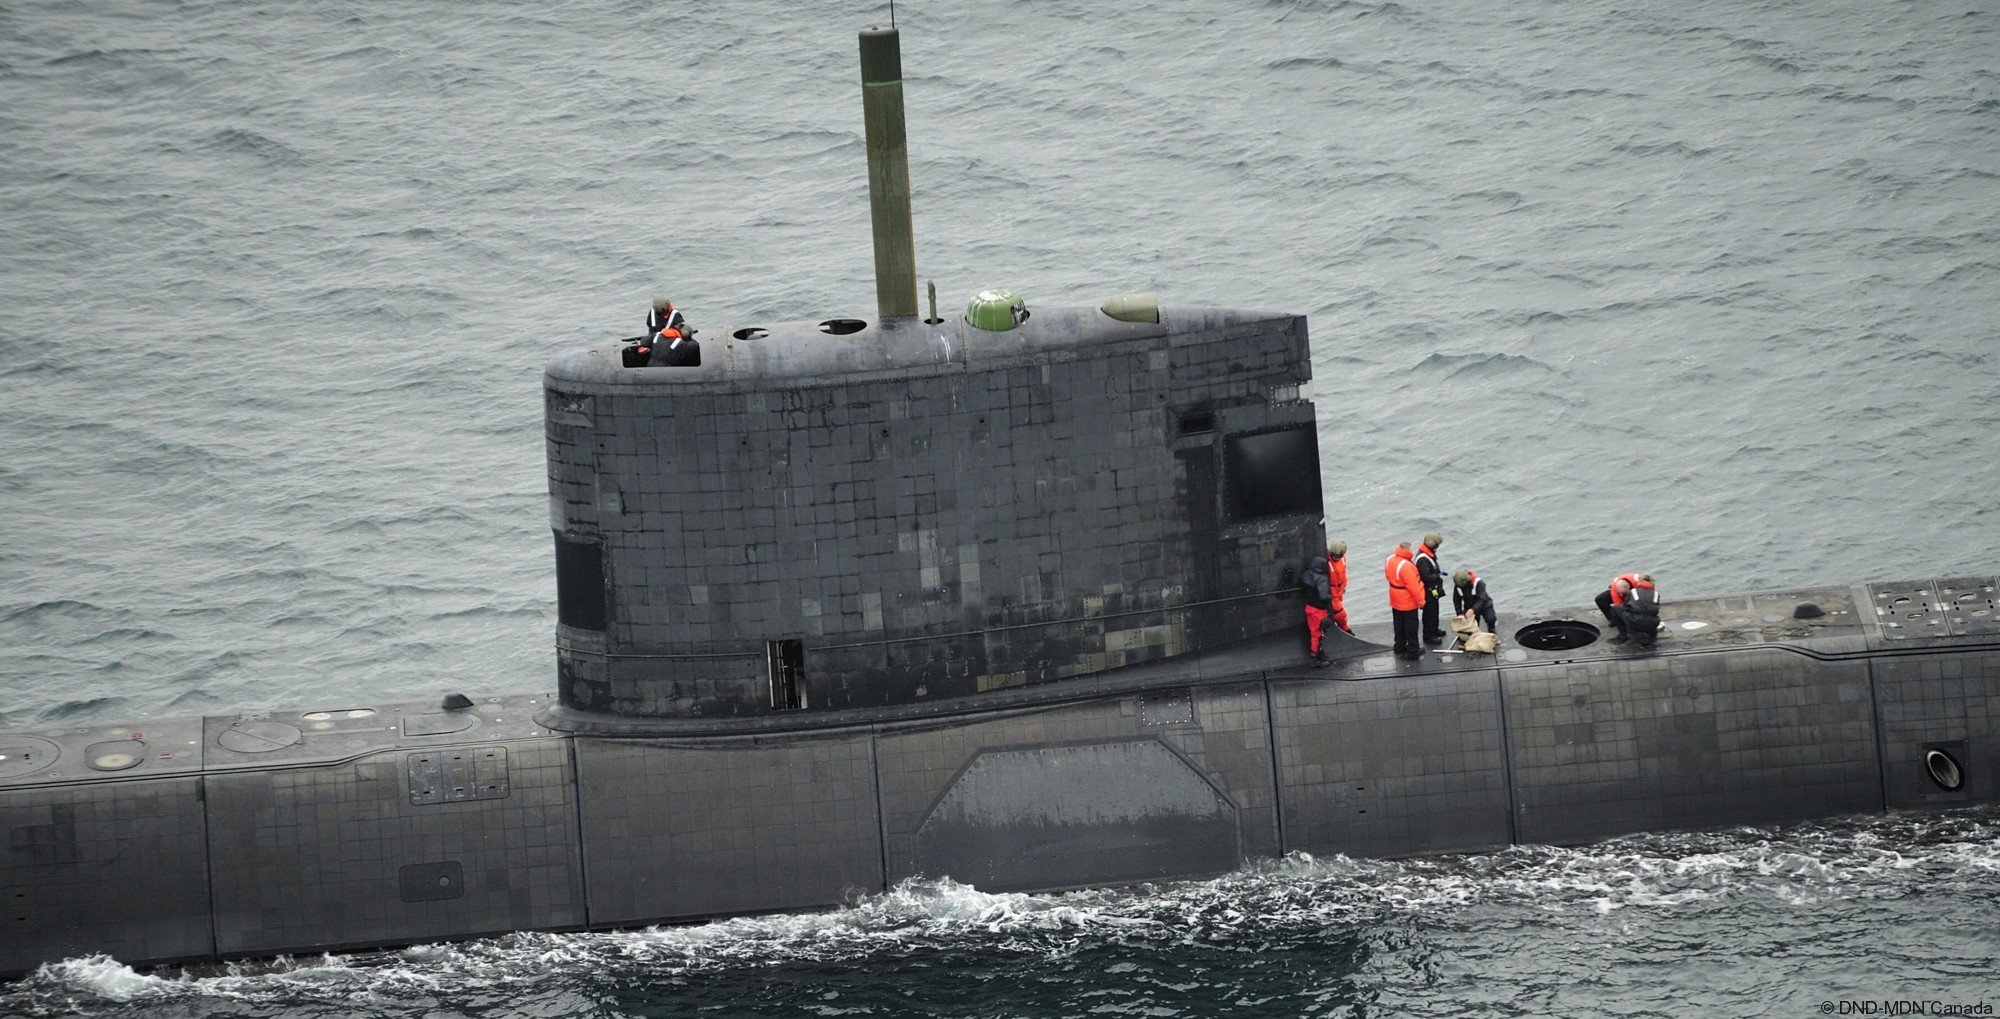 ssk-876 hmcs victoria upholder class attack submarine hunter killer ncsm royal canadian navy 29